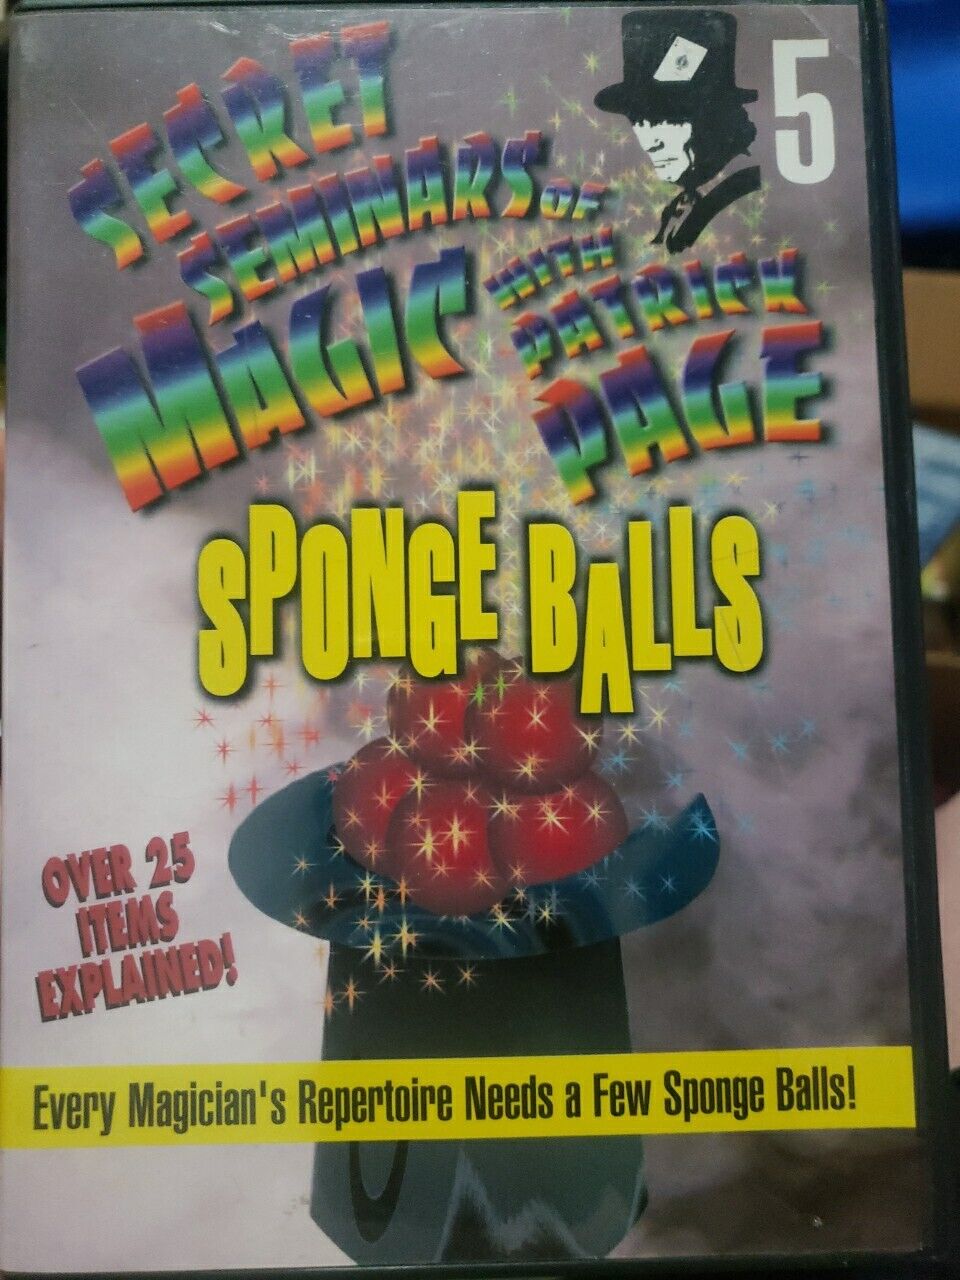 Secret Seminars of Magic Vol 5 (Sponge Balls) with Patrick Page - DVD